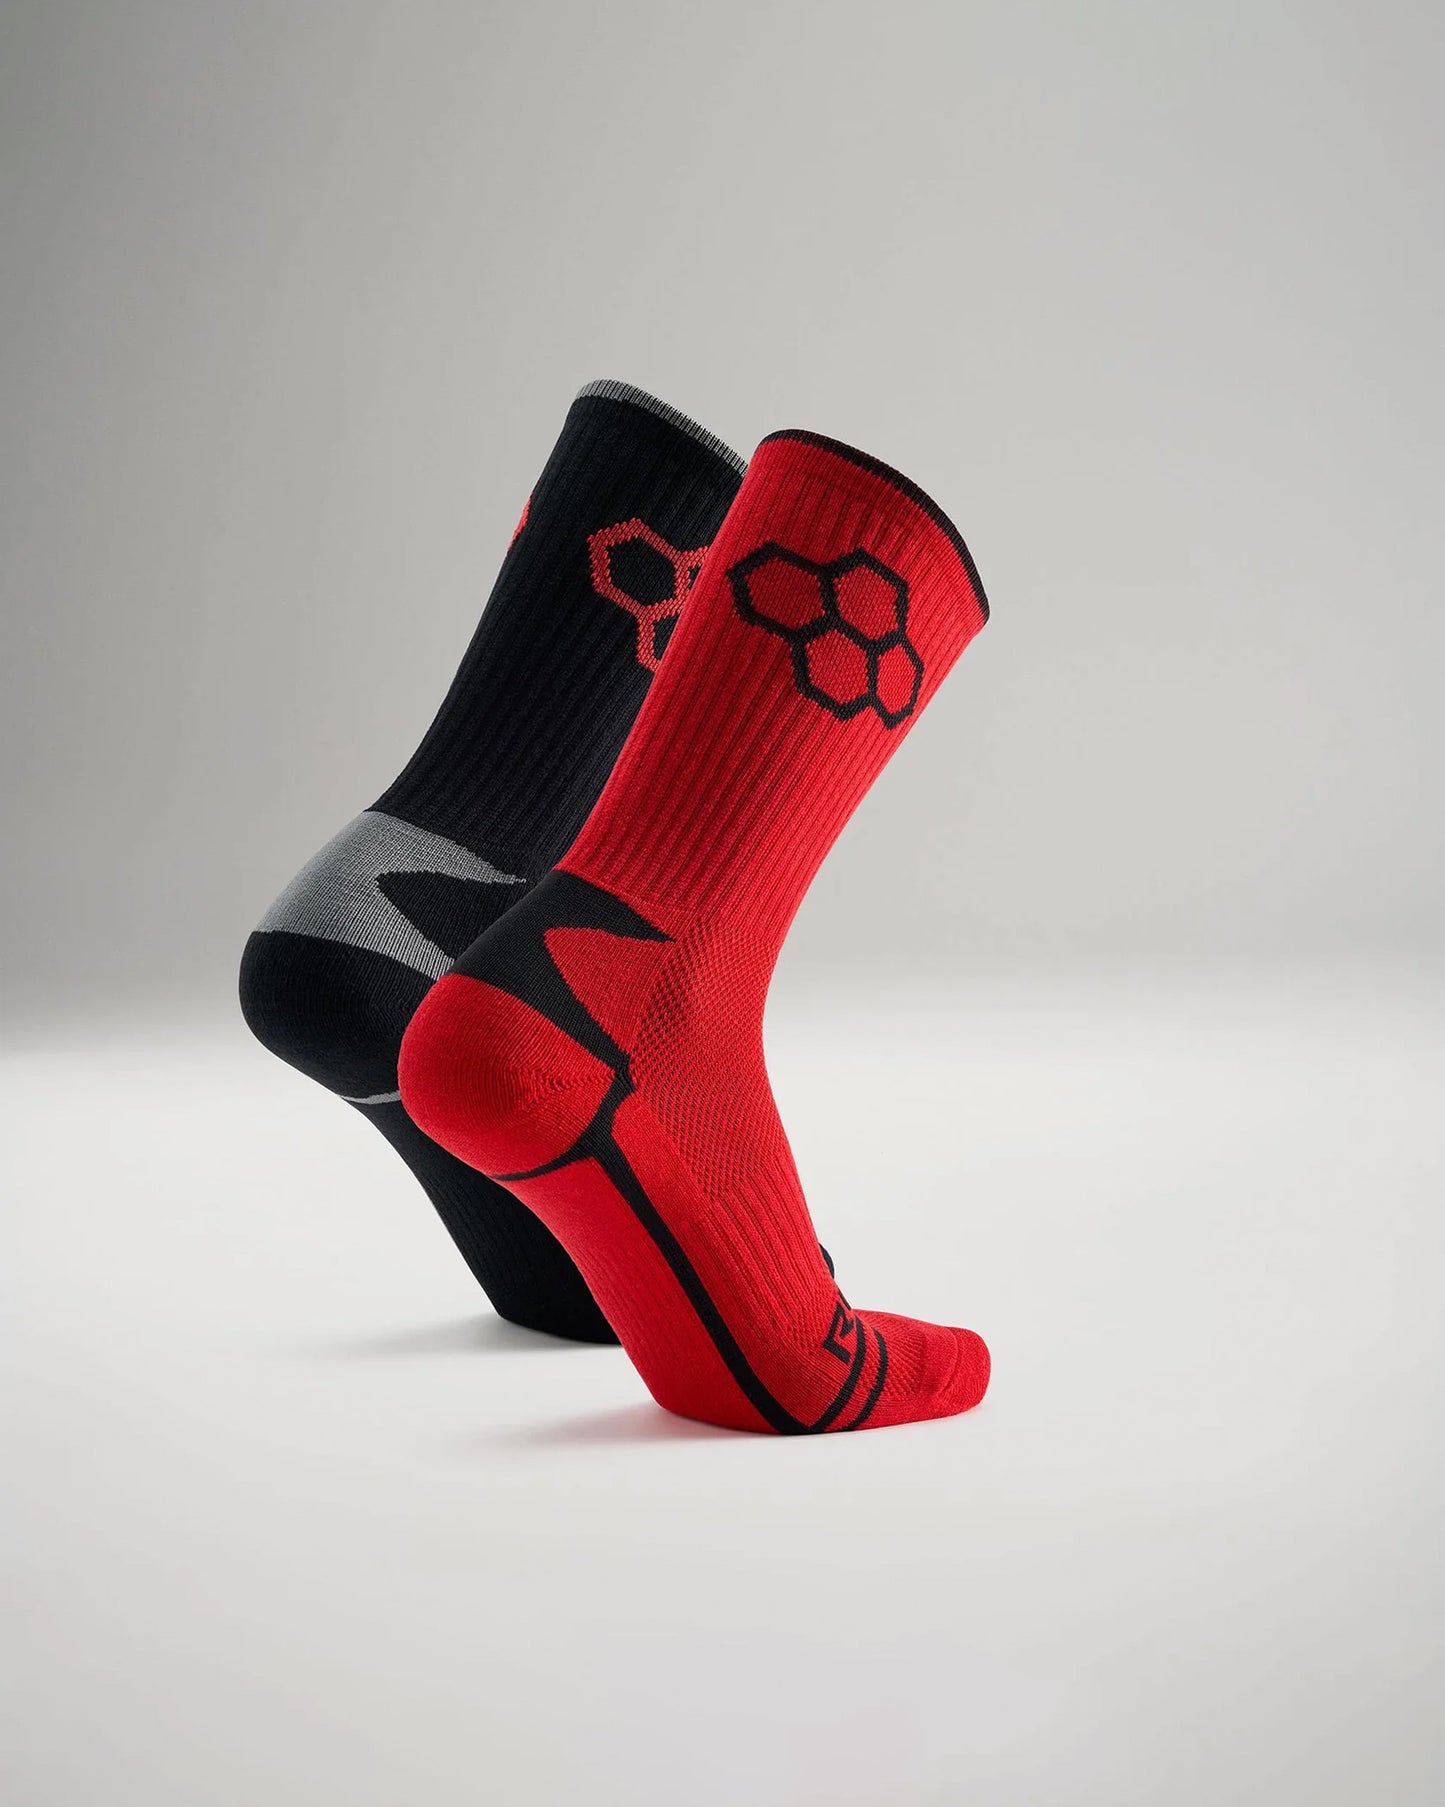 RUDIS Black/Red Knit Essential Socks (2 Pair)